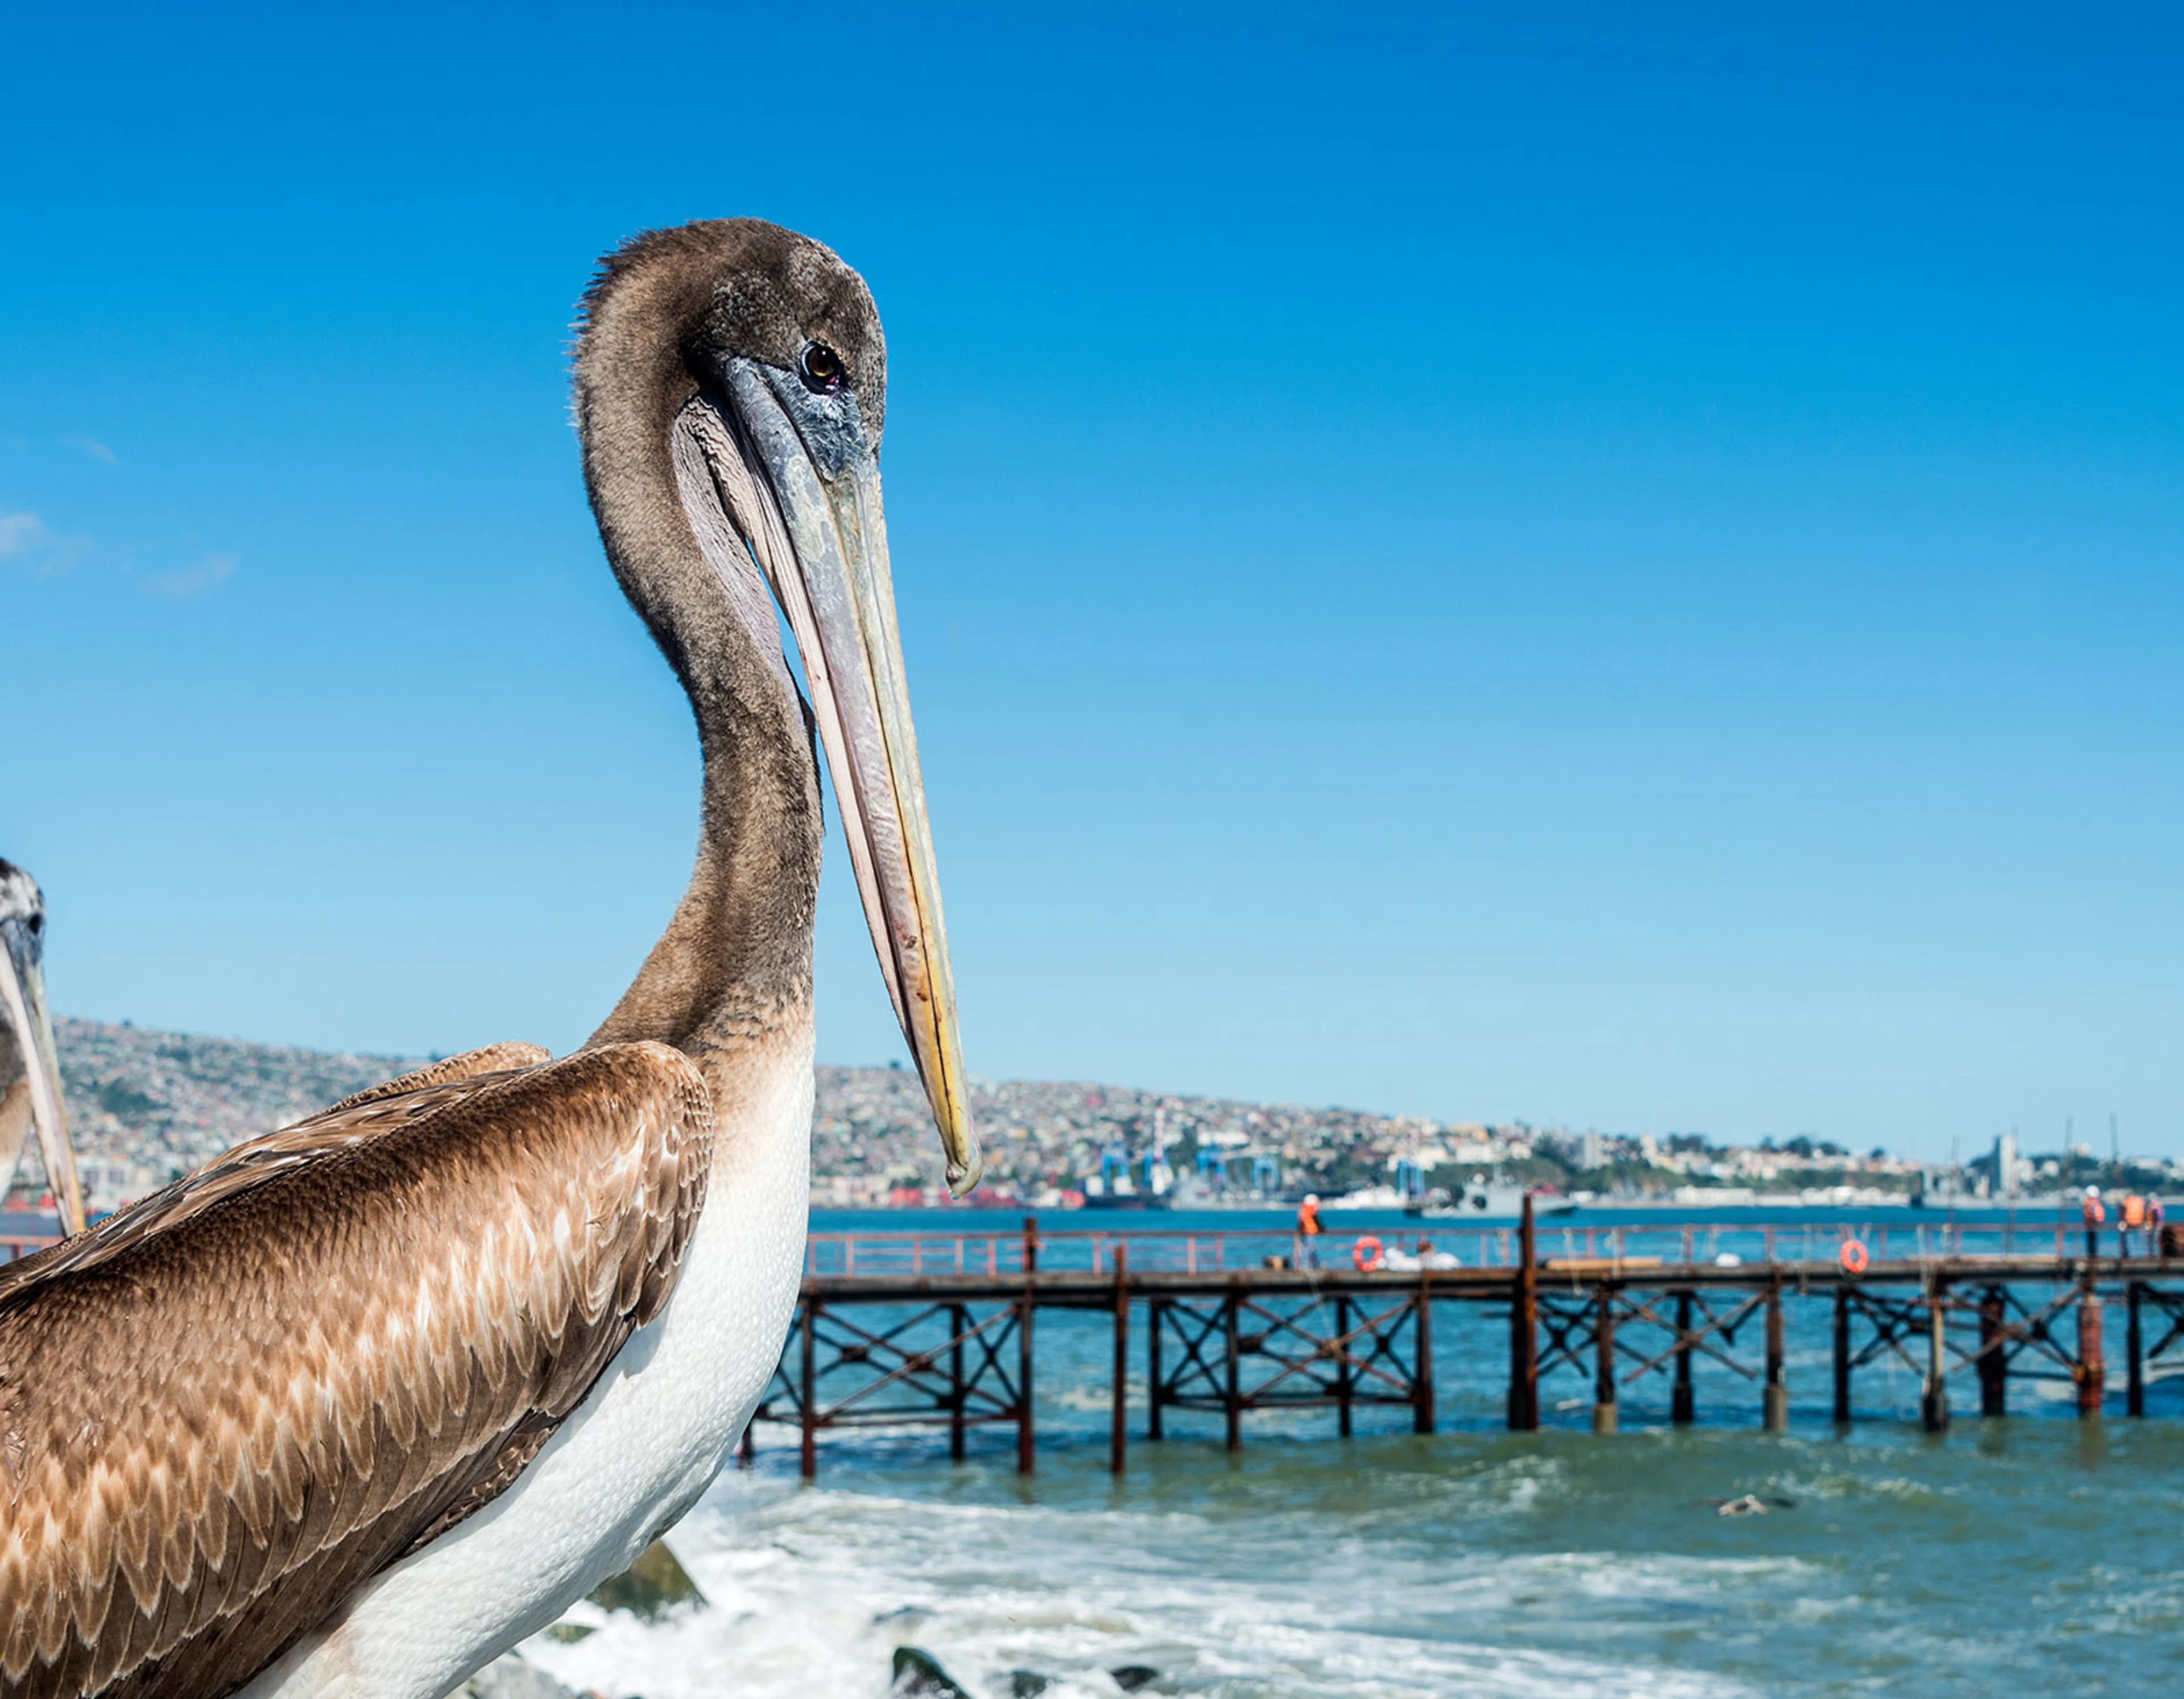 Pelicans on the beach in Valparaiso.